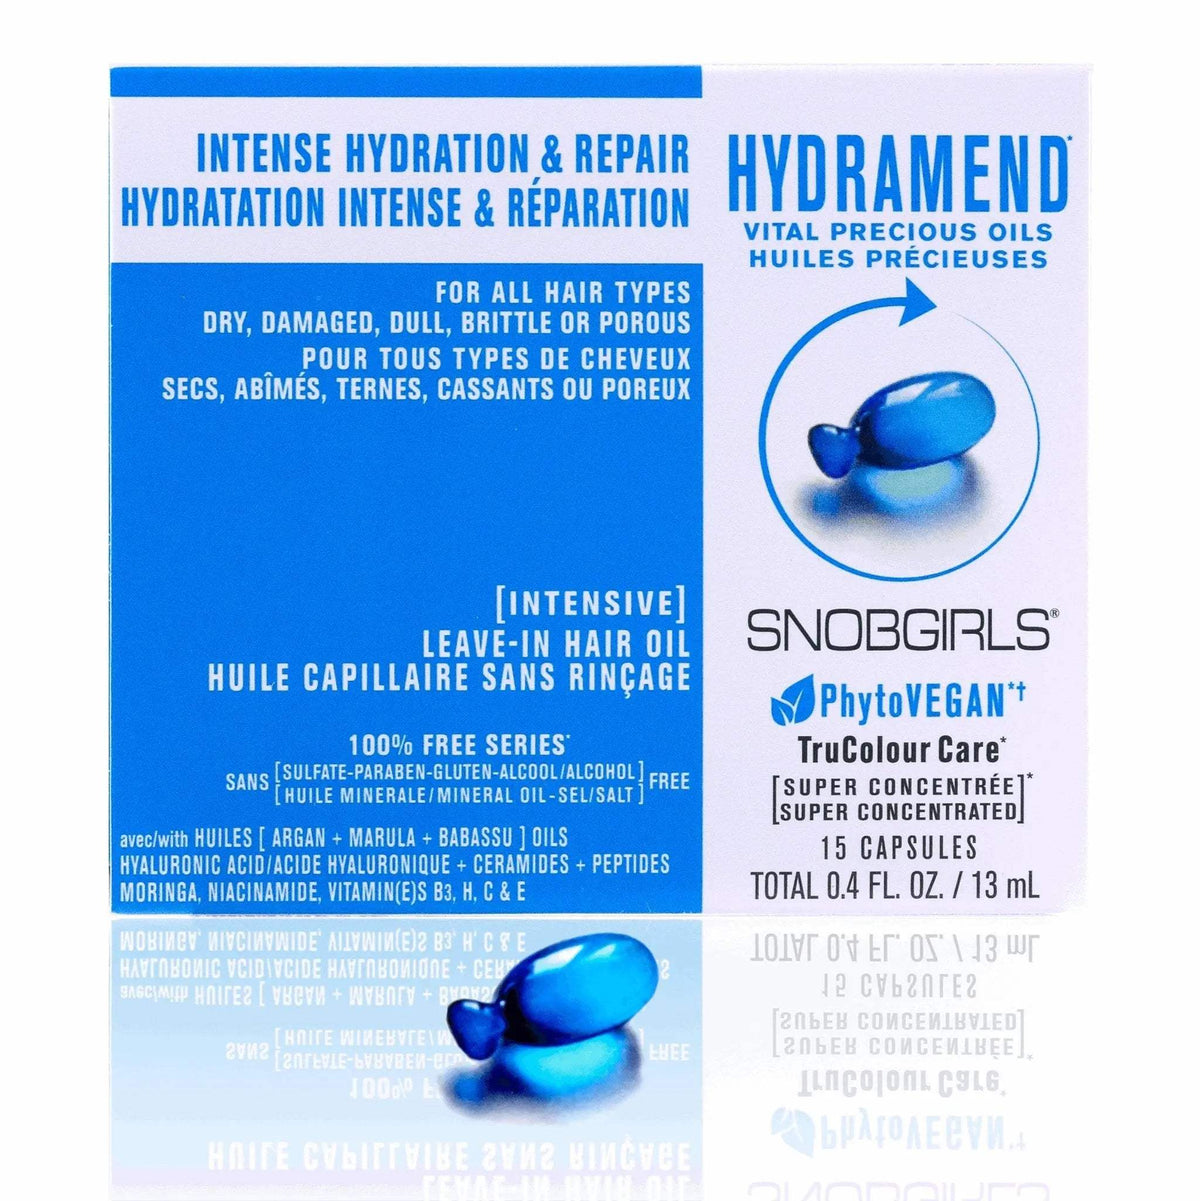 HYDRAMEND VITAL PRECIOUS OILS - 45 CAPSULES PhytoVEGAN Super Concentrated Intensive Leave-In Hair Oil - SNOBGIRLS.com